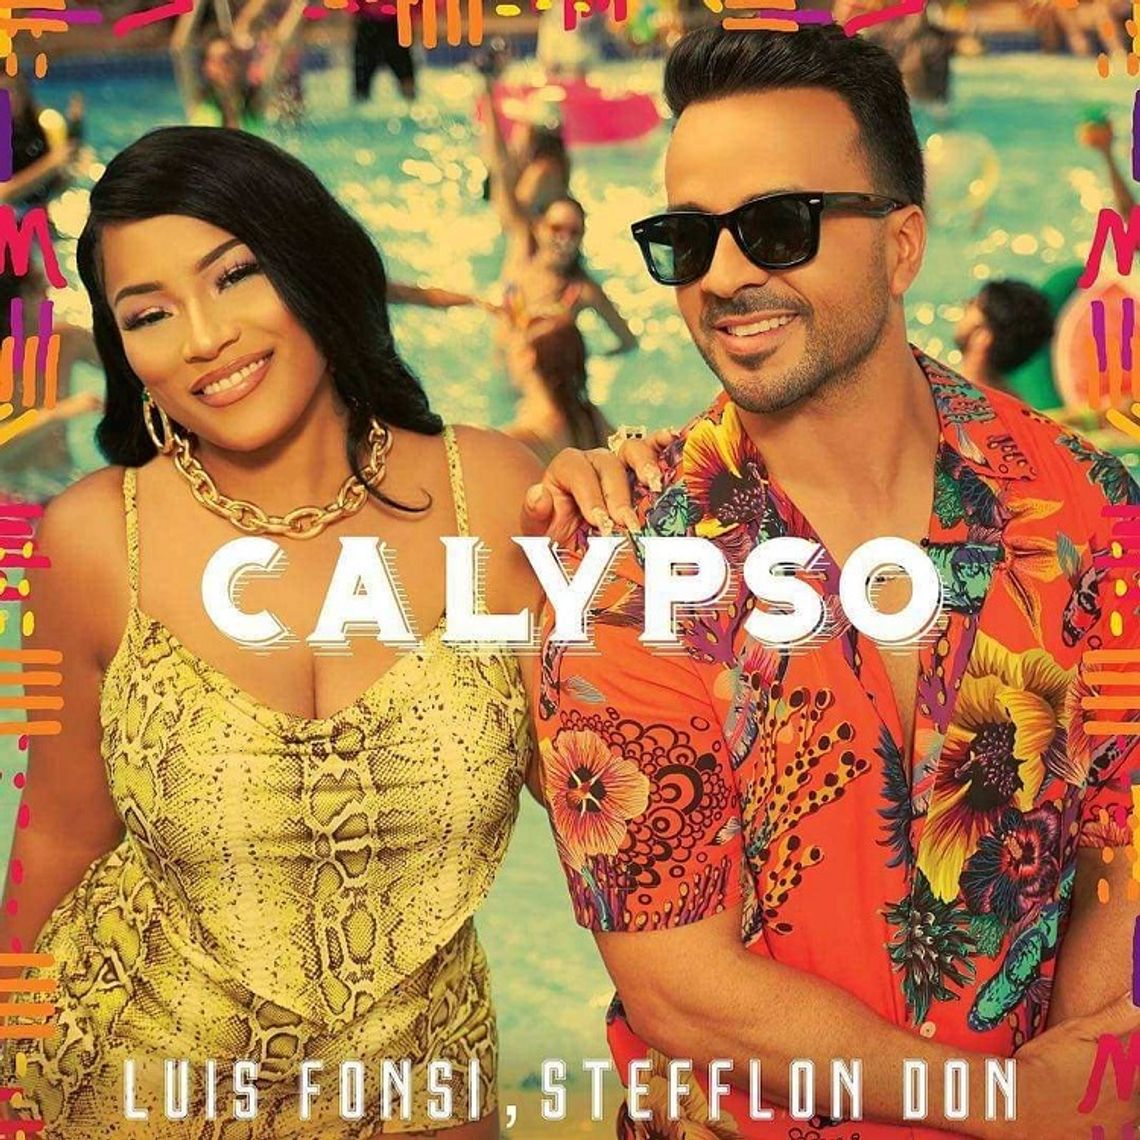 Luis Fonsi, Stefflon Don - "Calypso"